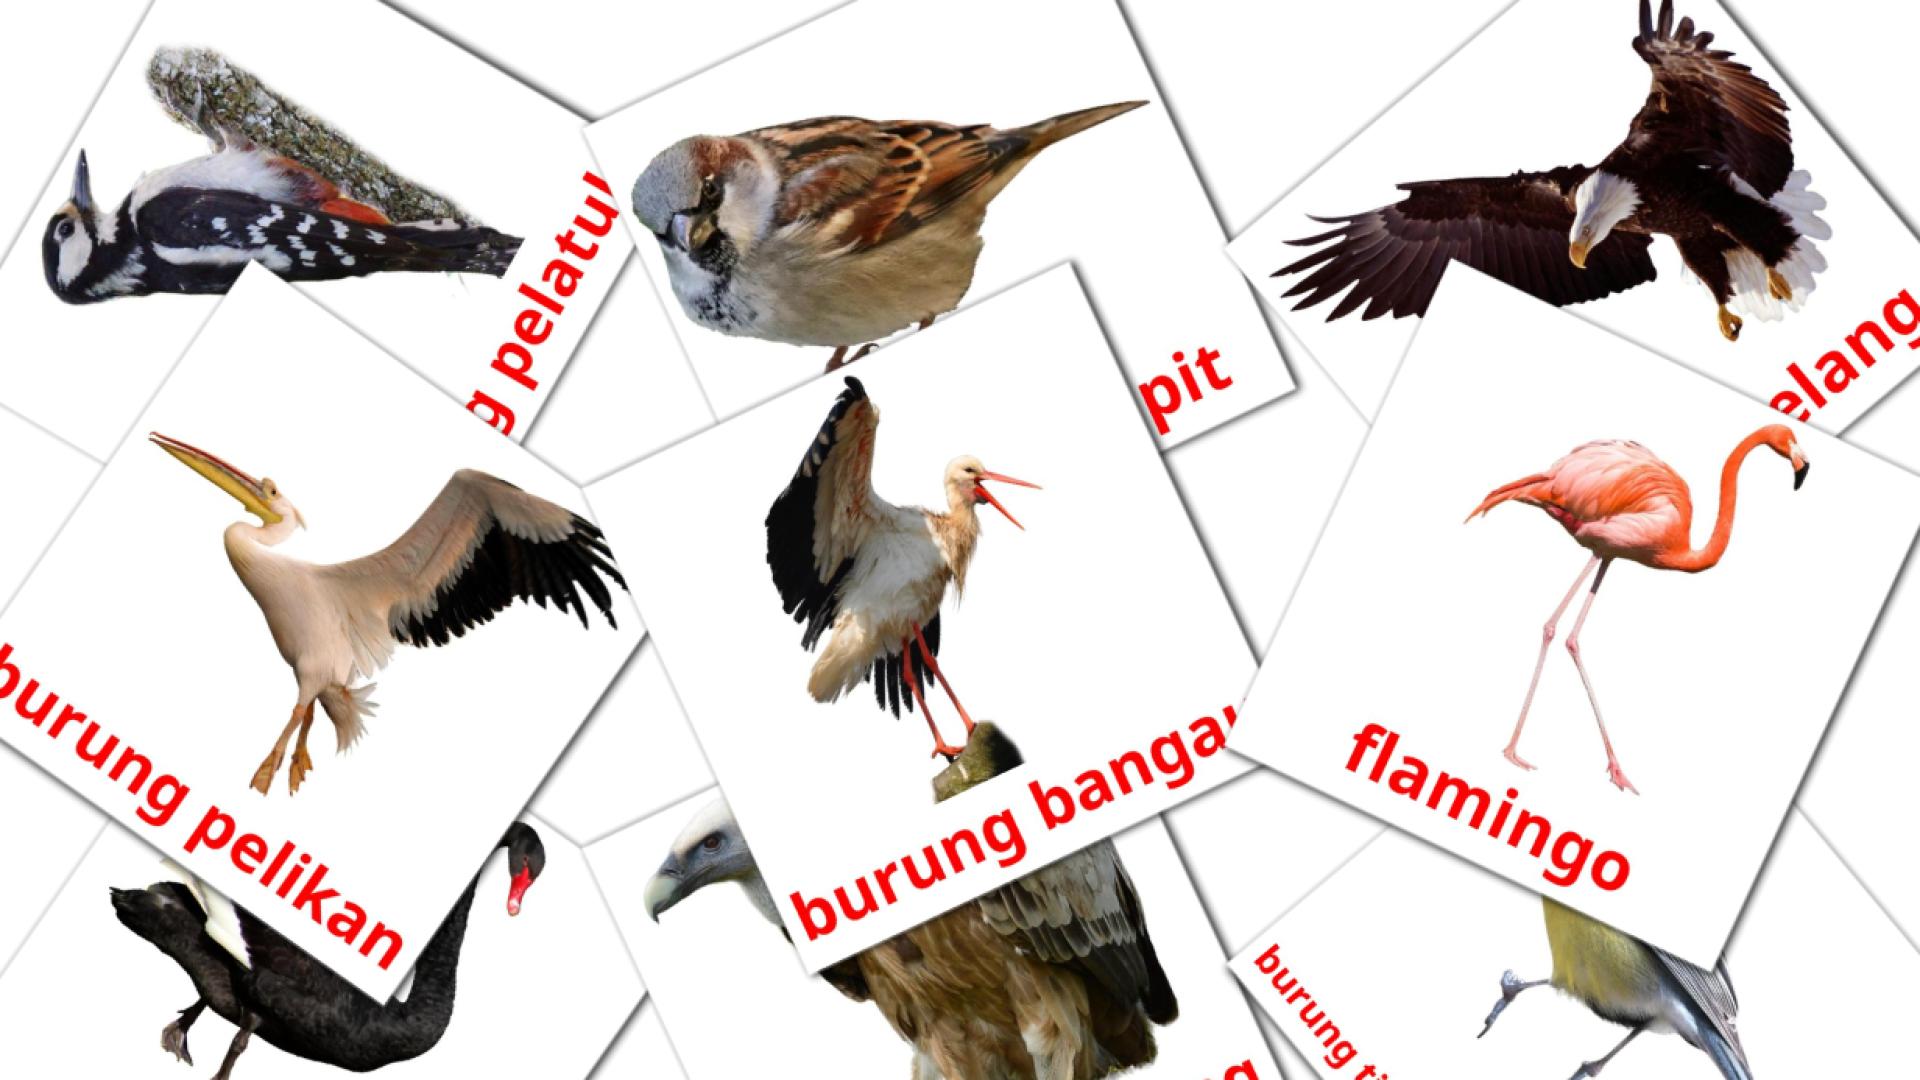 Burung liar flashcards